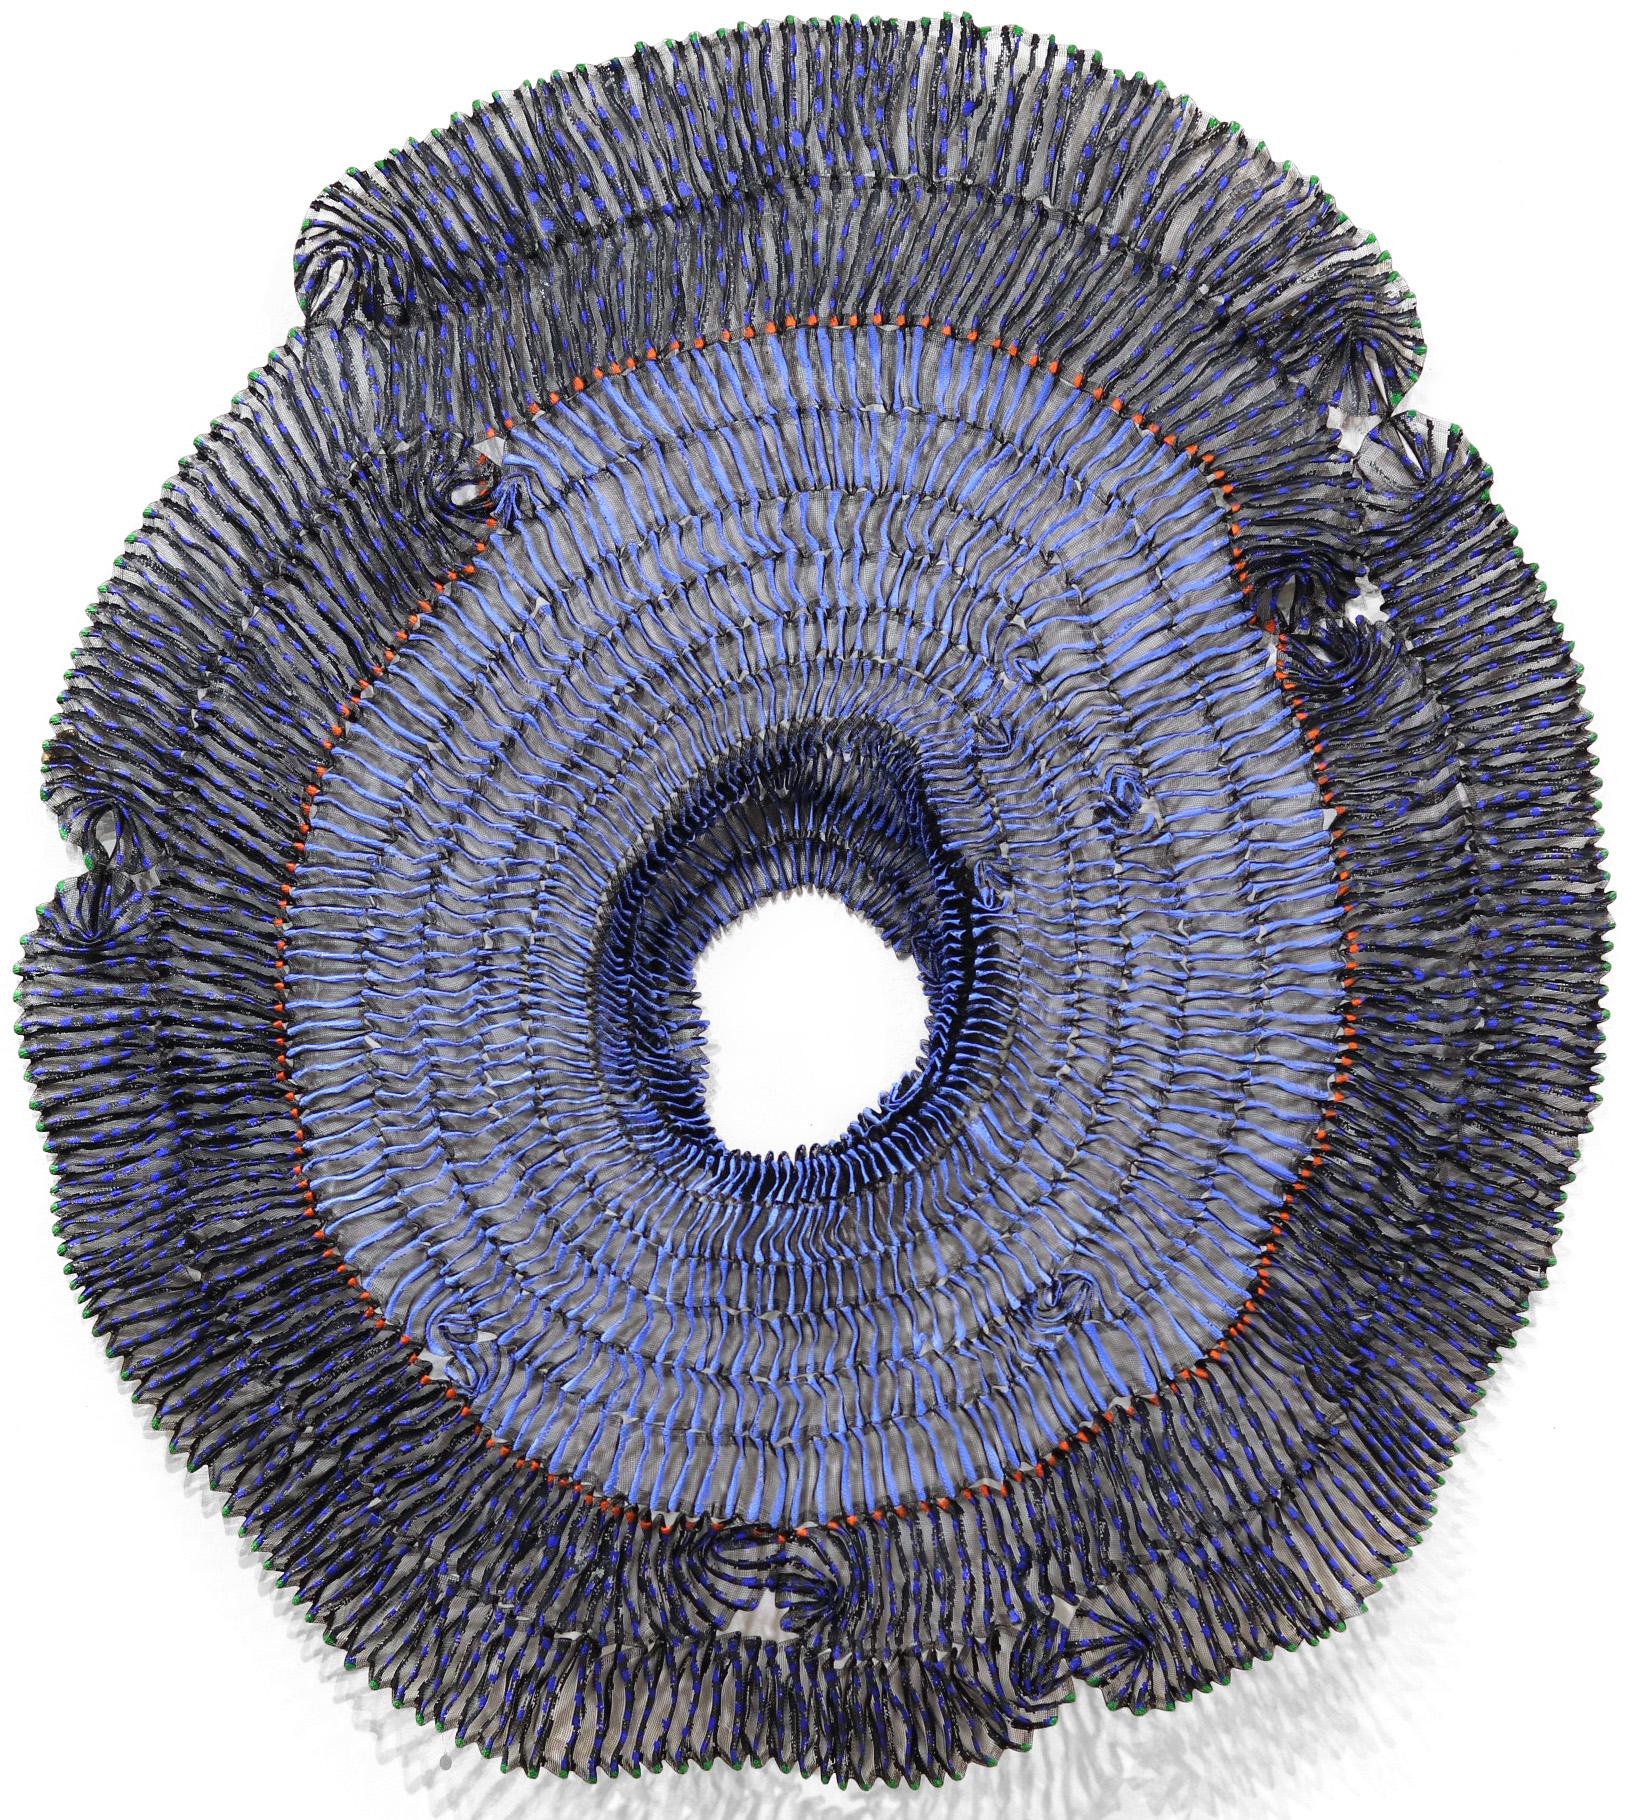 Atticus Adams Abstract Sculpture - Sujoon - Cornflower Portal - Large Lightweight Three-Dimensional Wall Sculpture